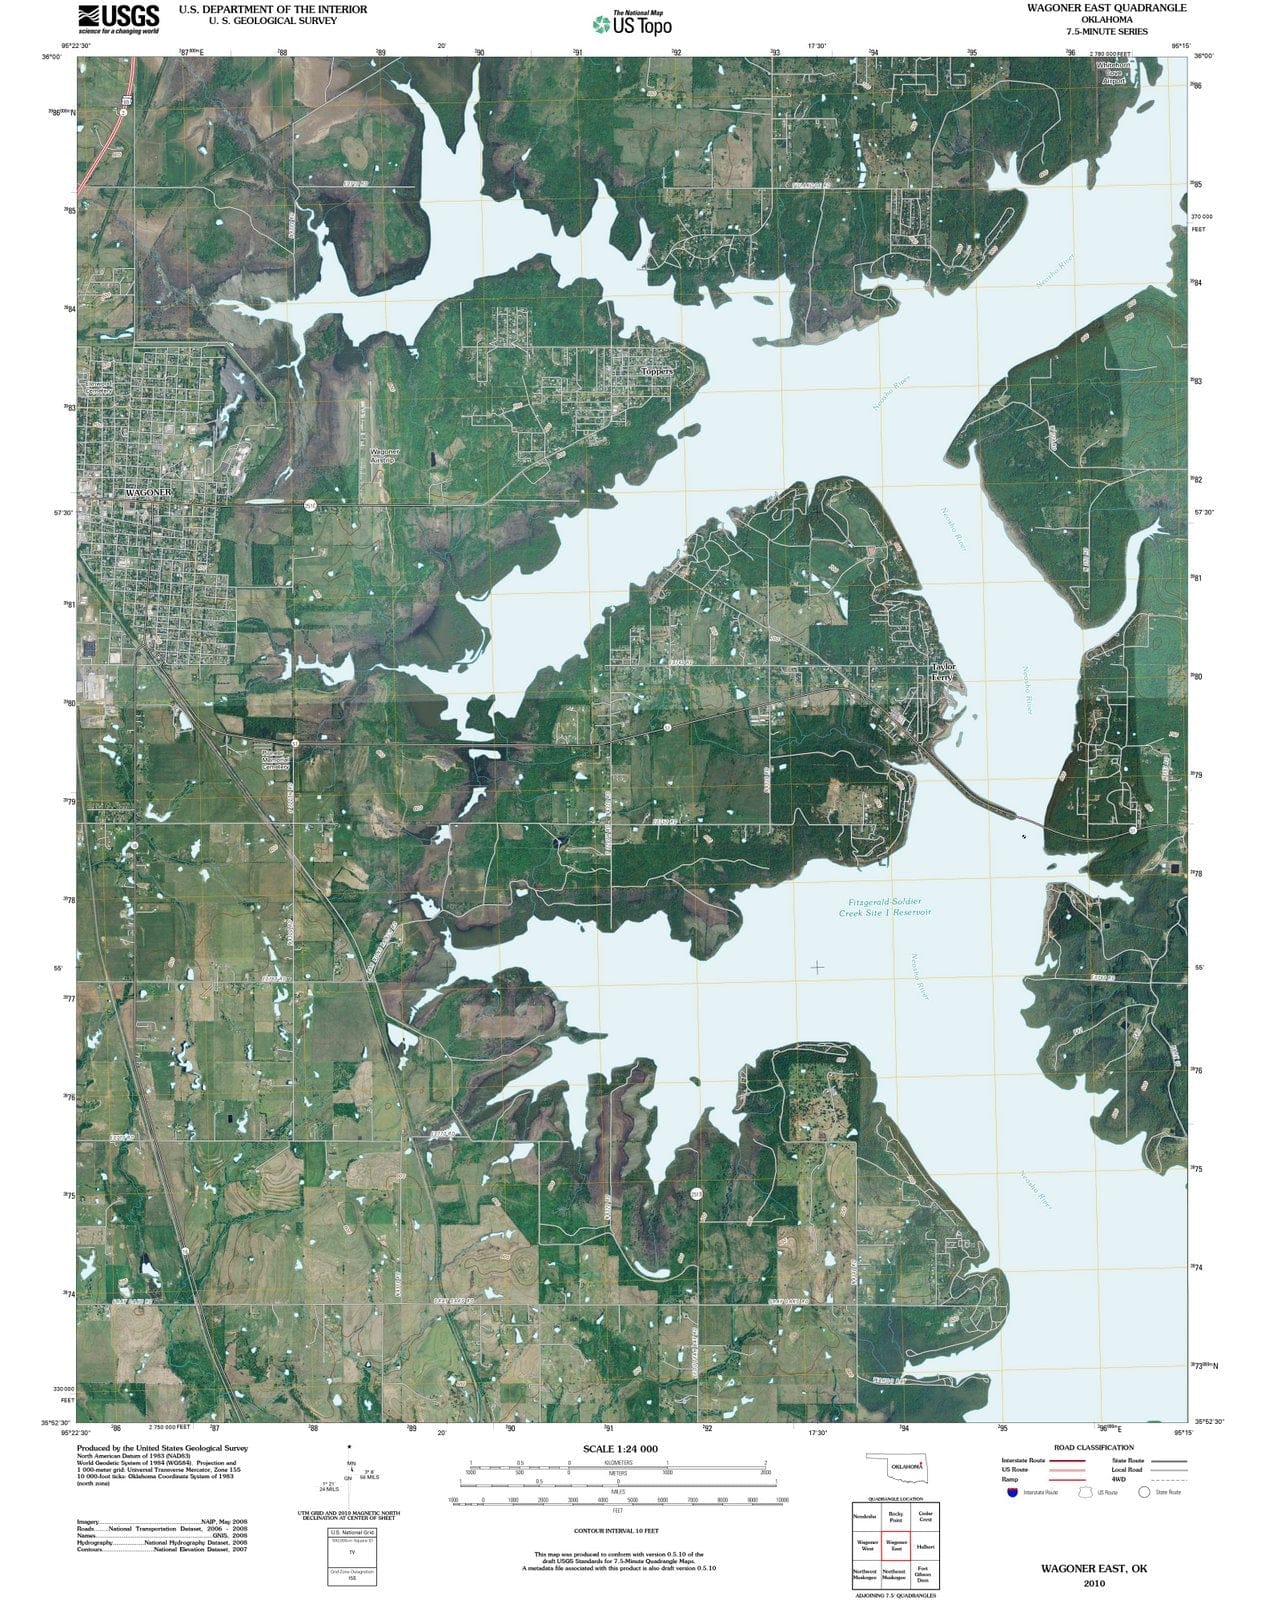 2010 Wagoner East, OK - Oklahoma - USGS Topographic Map